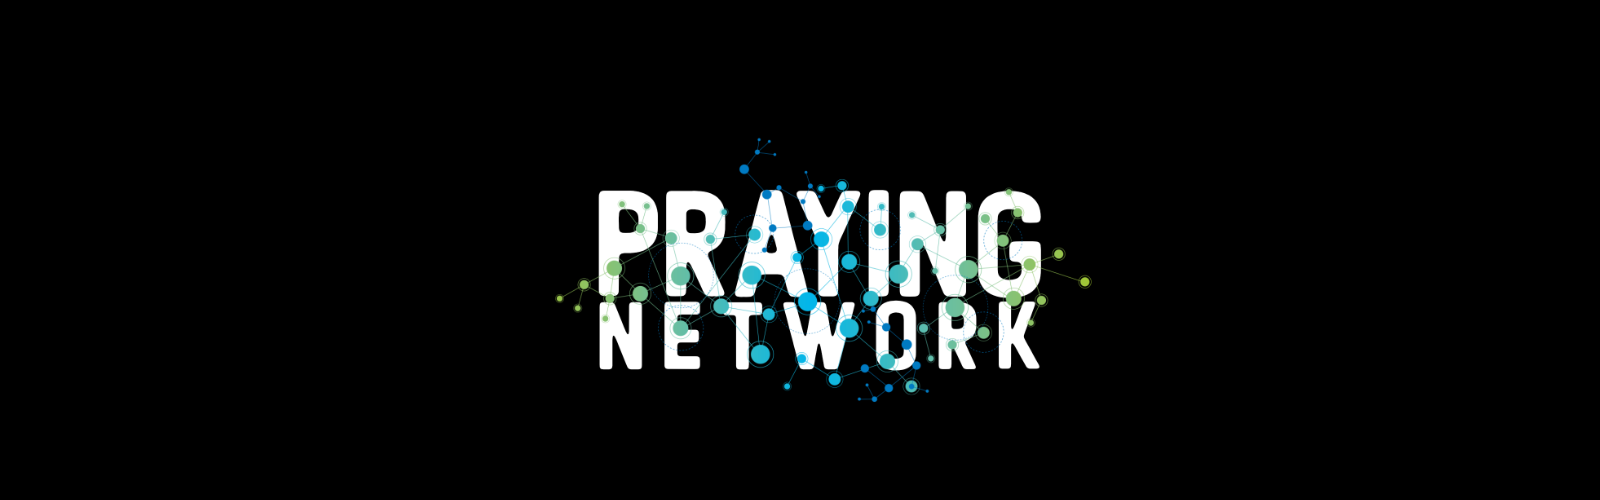 praying network slider